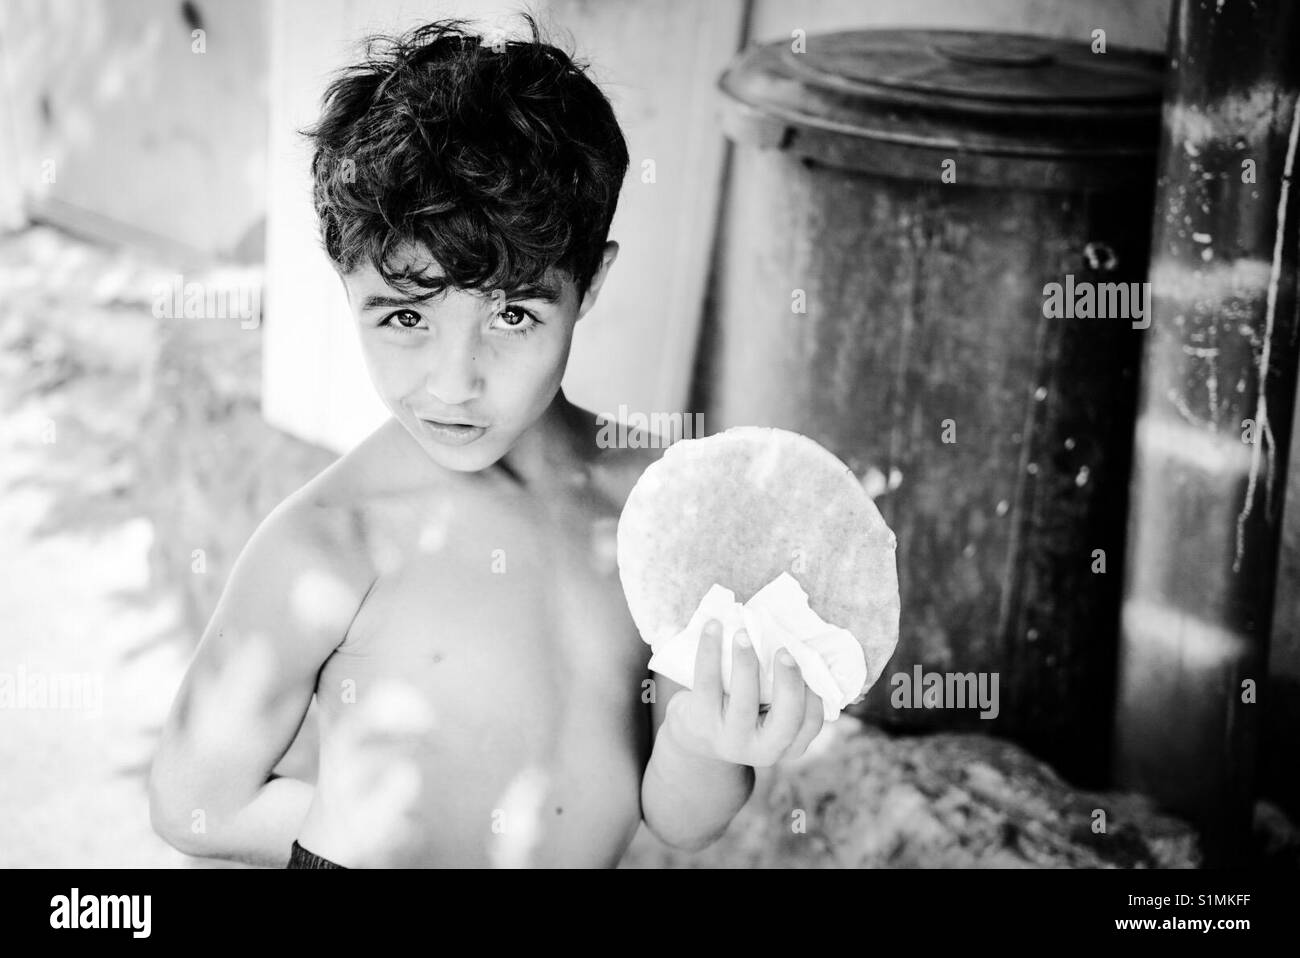 Un bambino profugo in Aida Camp di Betlemme, Palestina. Foto Stock